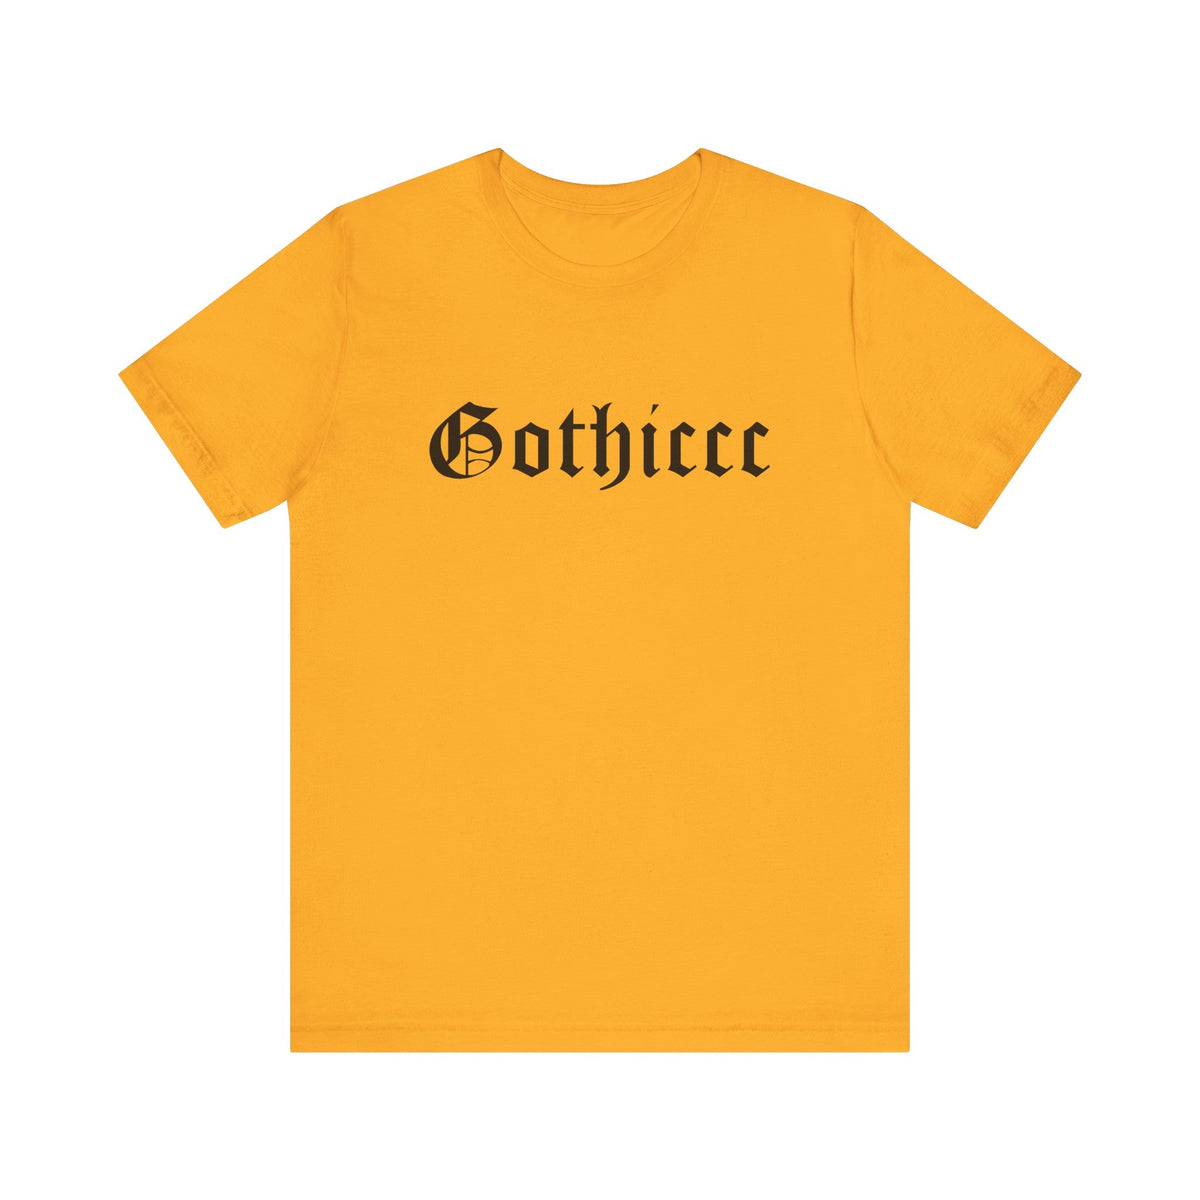 Gothiccc Large Font T - Shirt - Goth Cloth Co.T - Shirt10654324057652952167